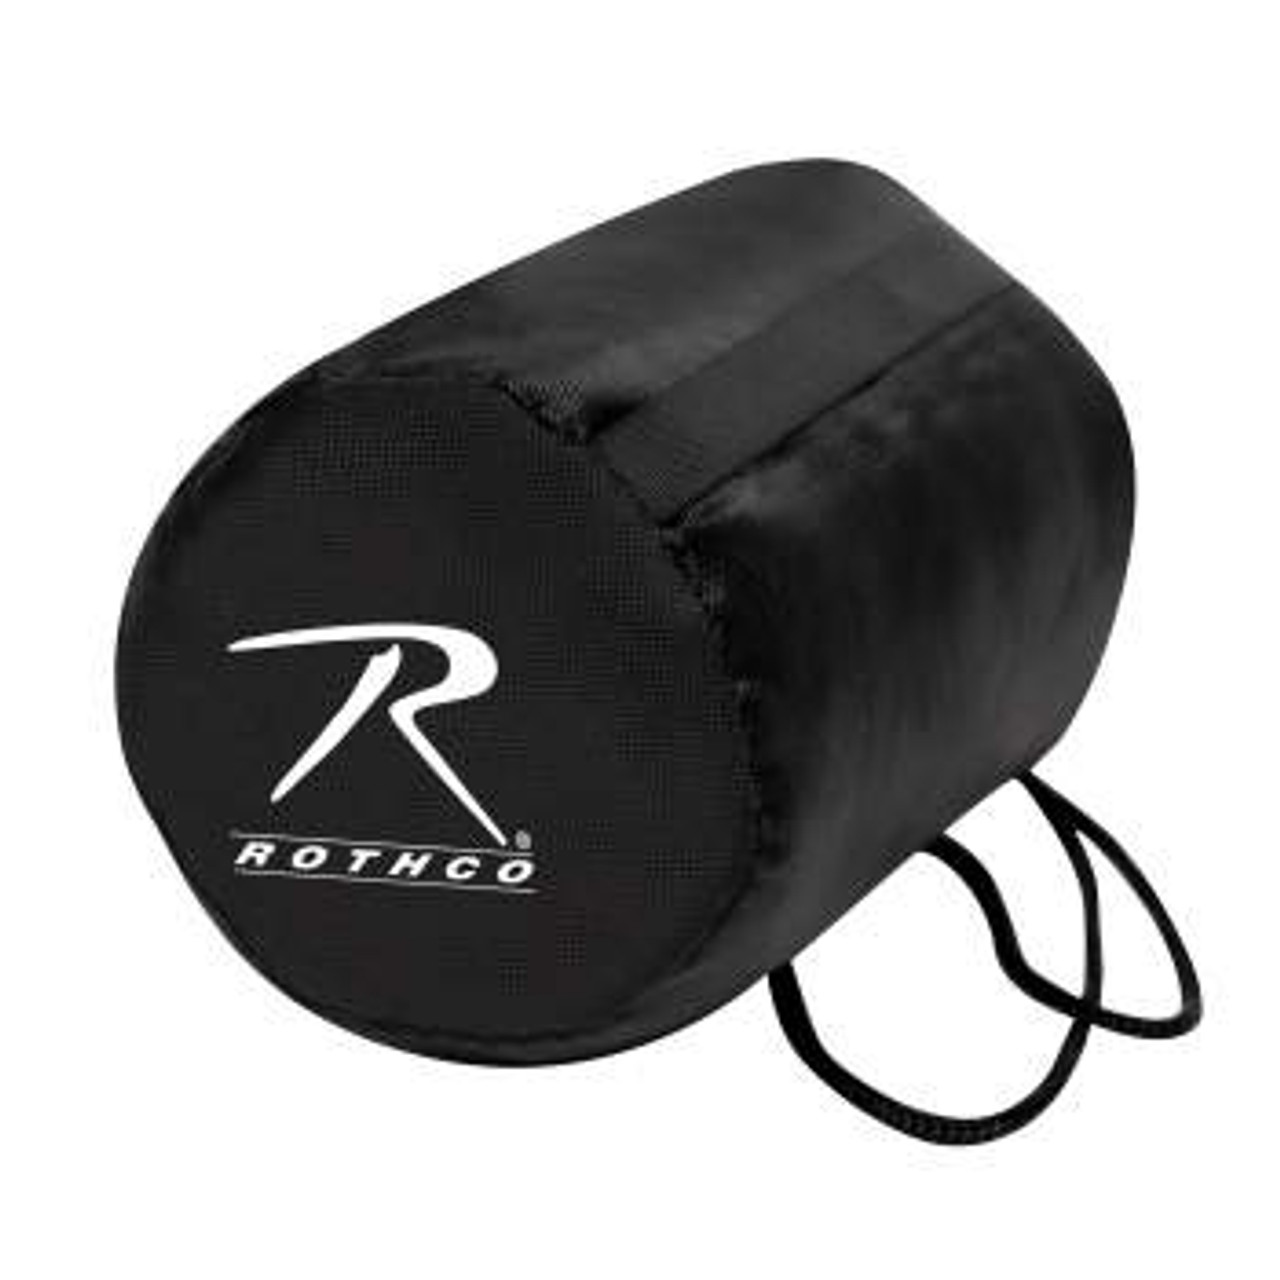 Rothco Inflatable Camping Pillow - Black